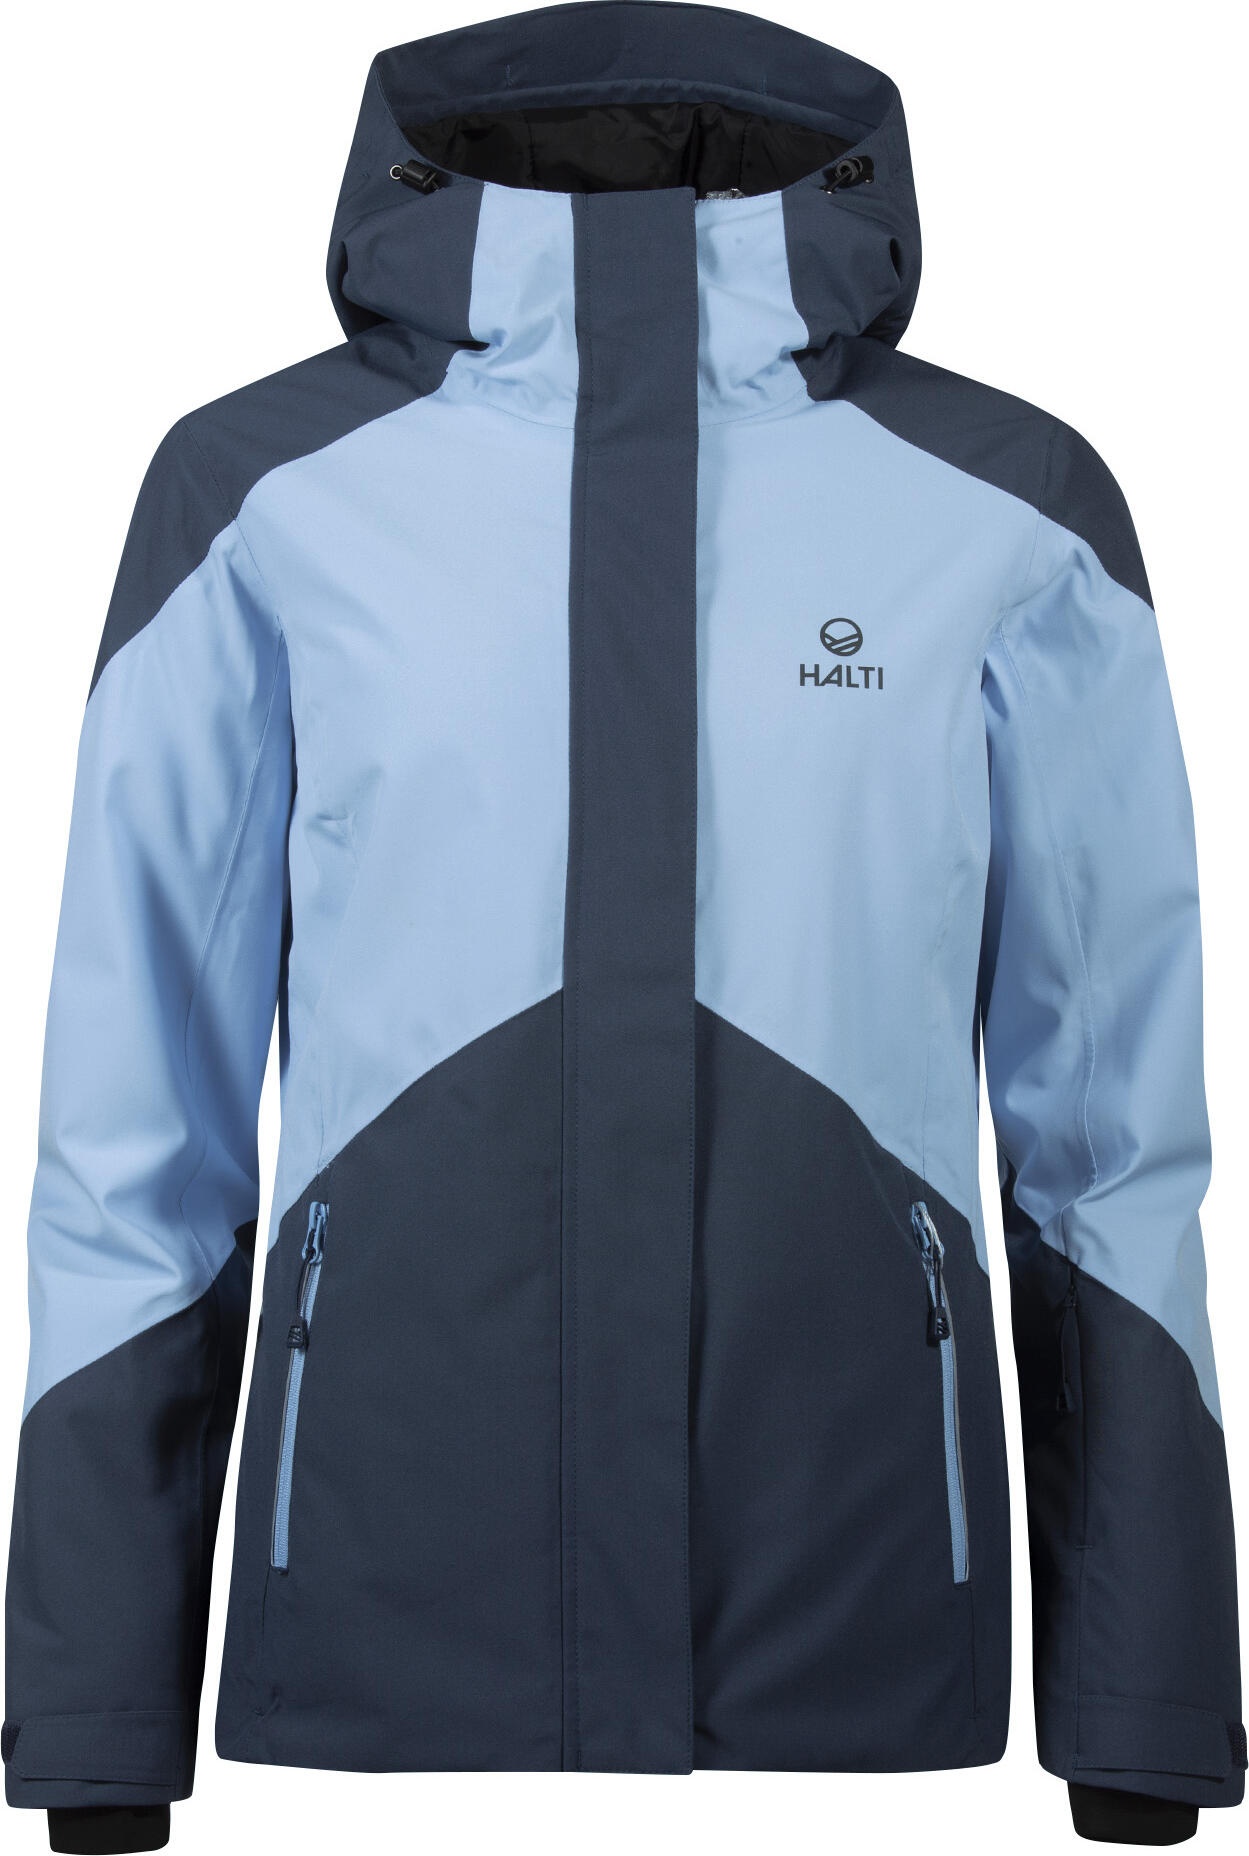 Halti Corinne W DX Ski Jacket placid blue (A32) 36